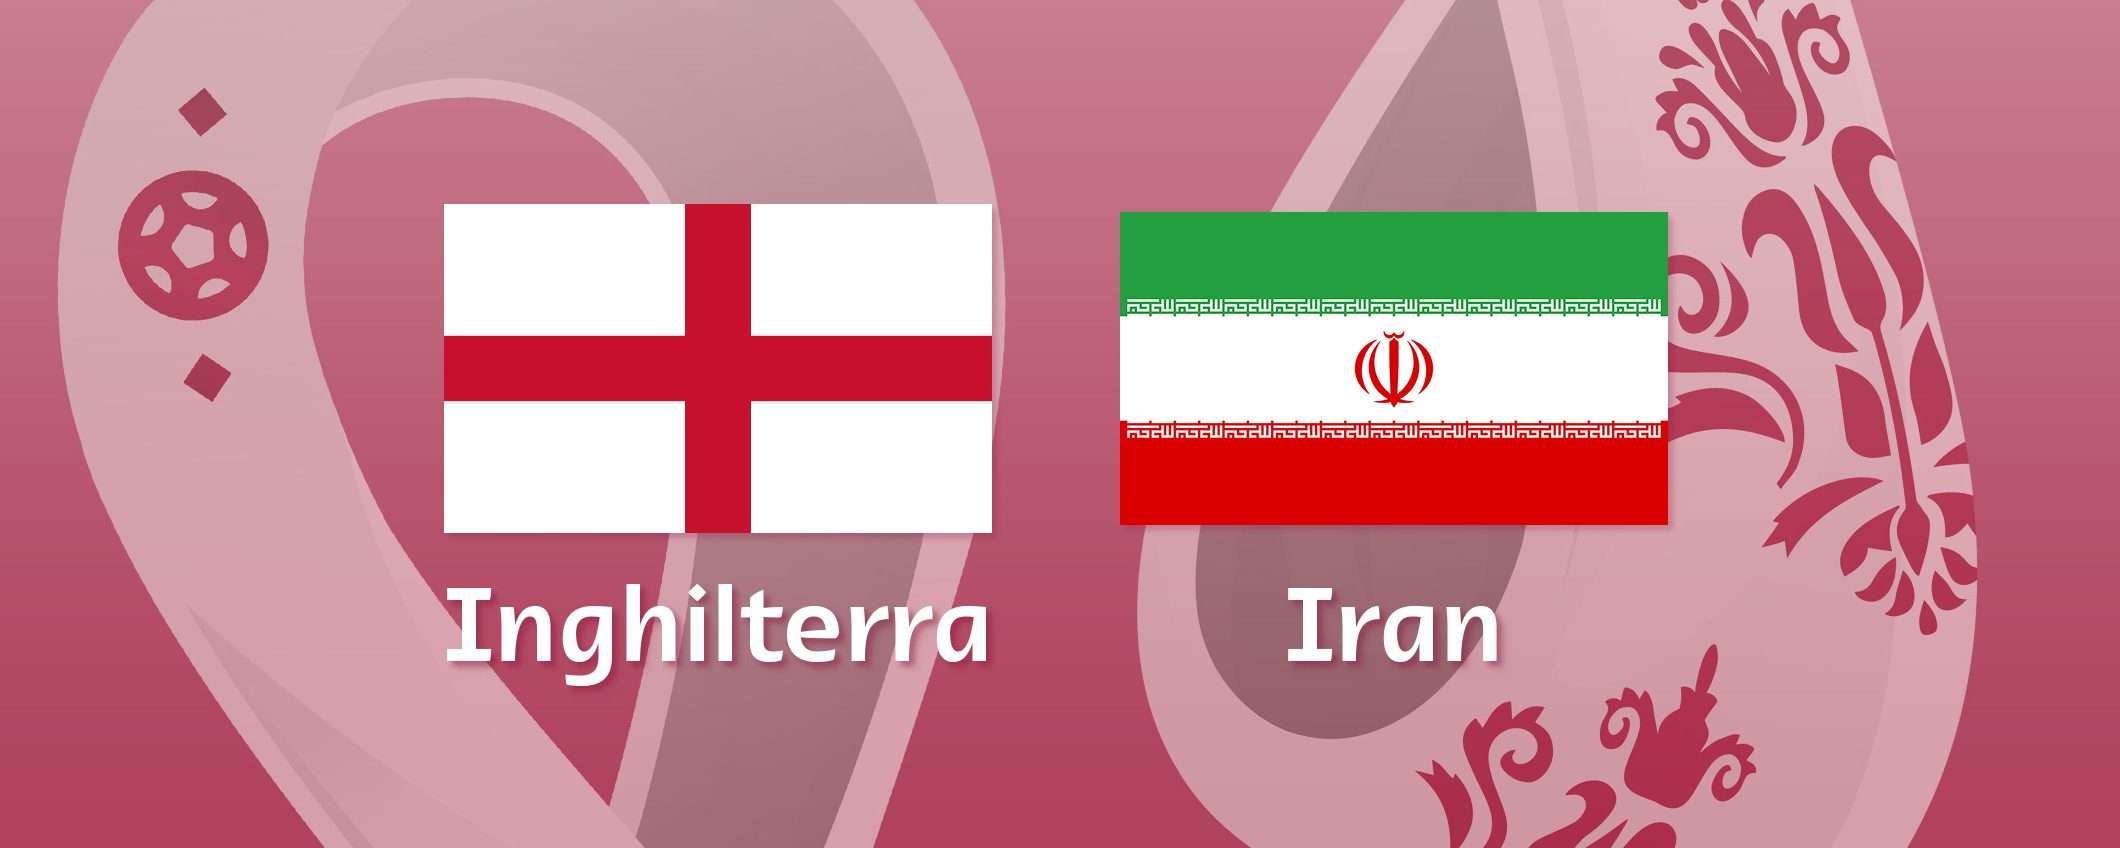 Come vedere Inghilterra-Iran in streaming (Mondiali)